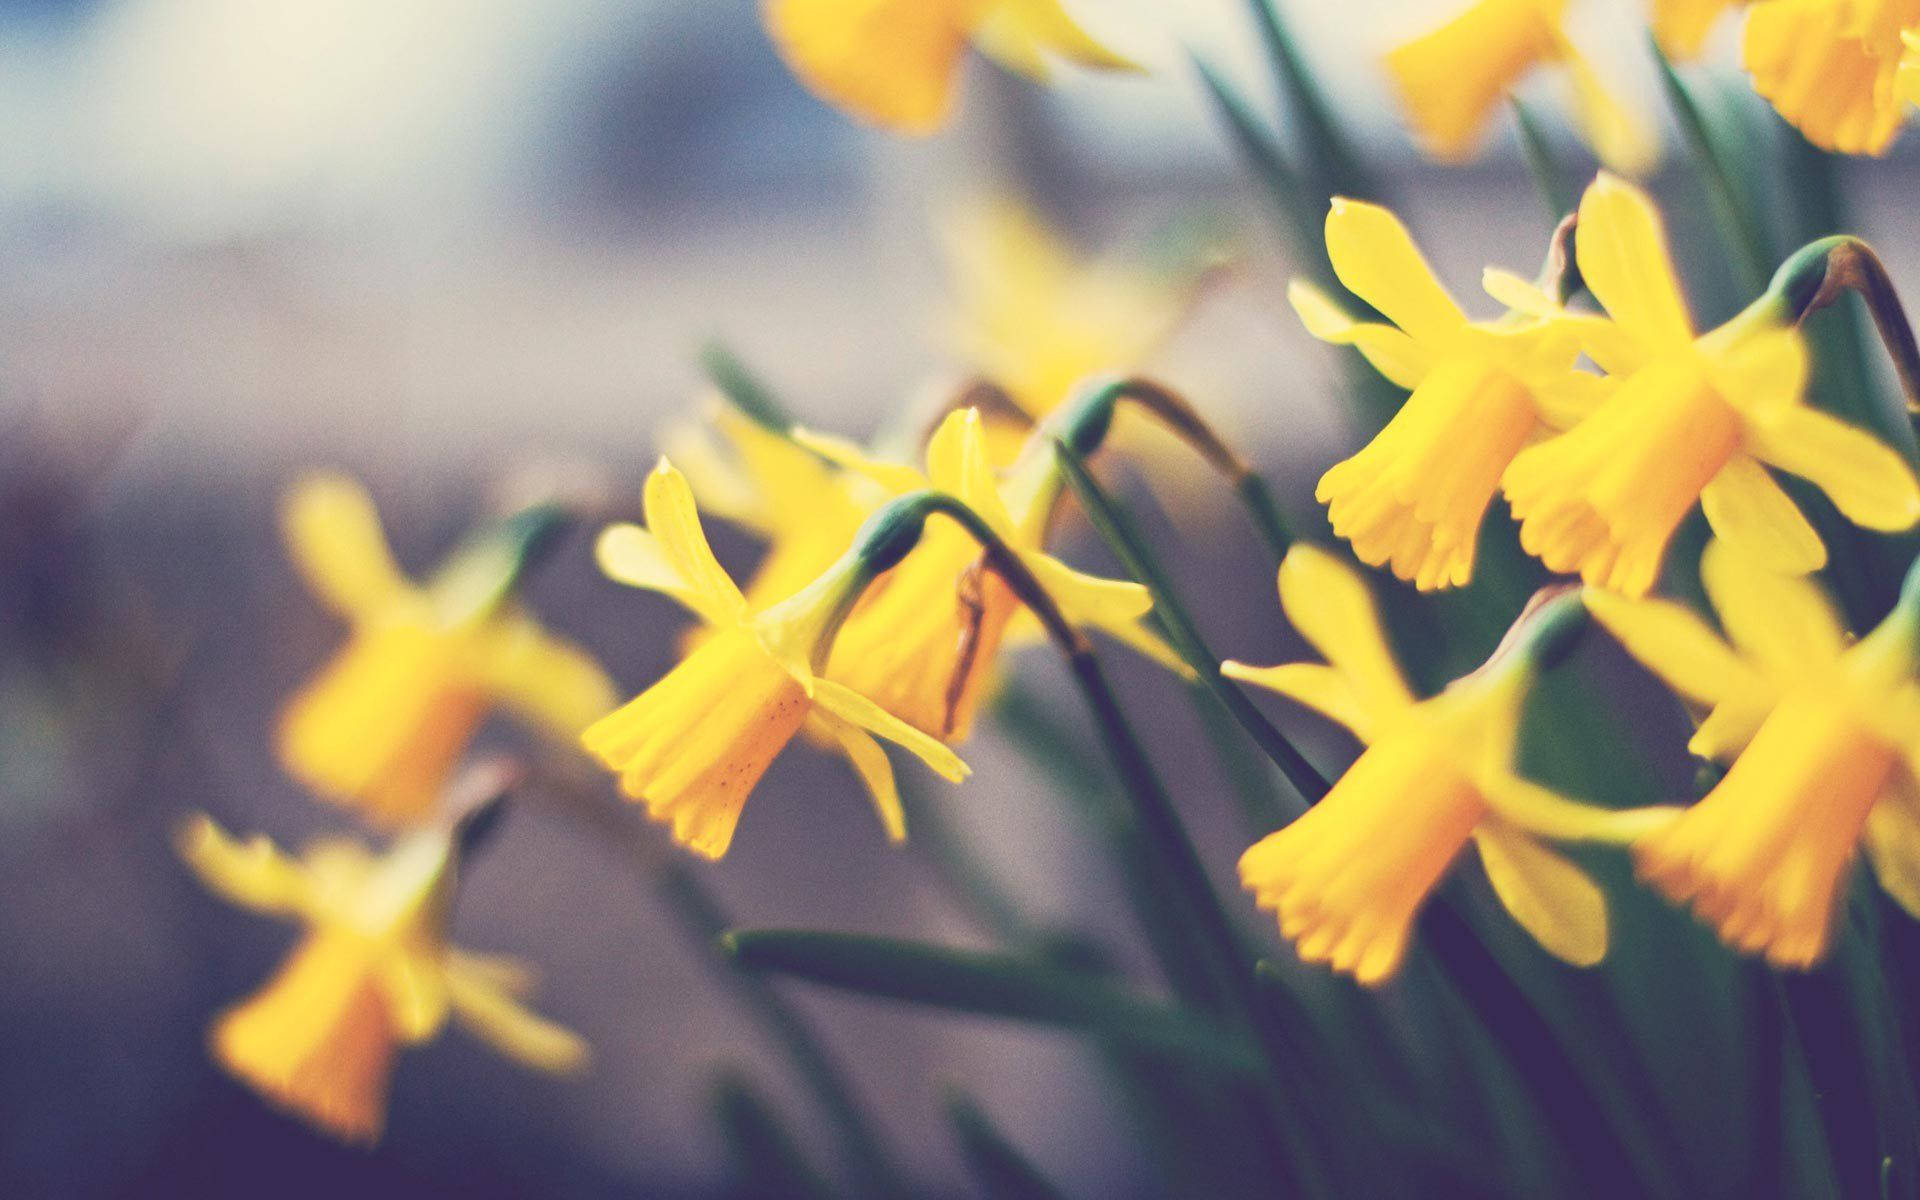 Focus Blurred Daffodils